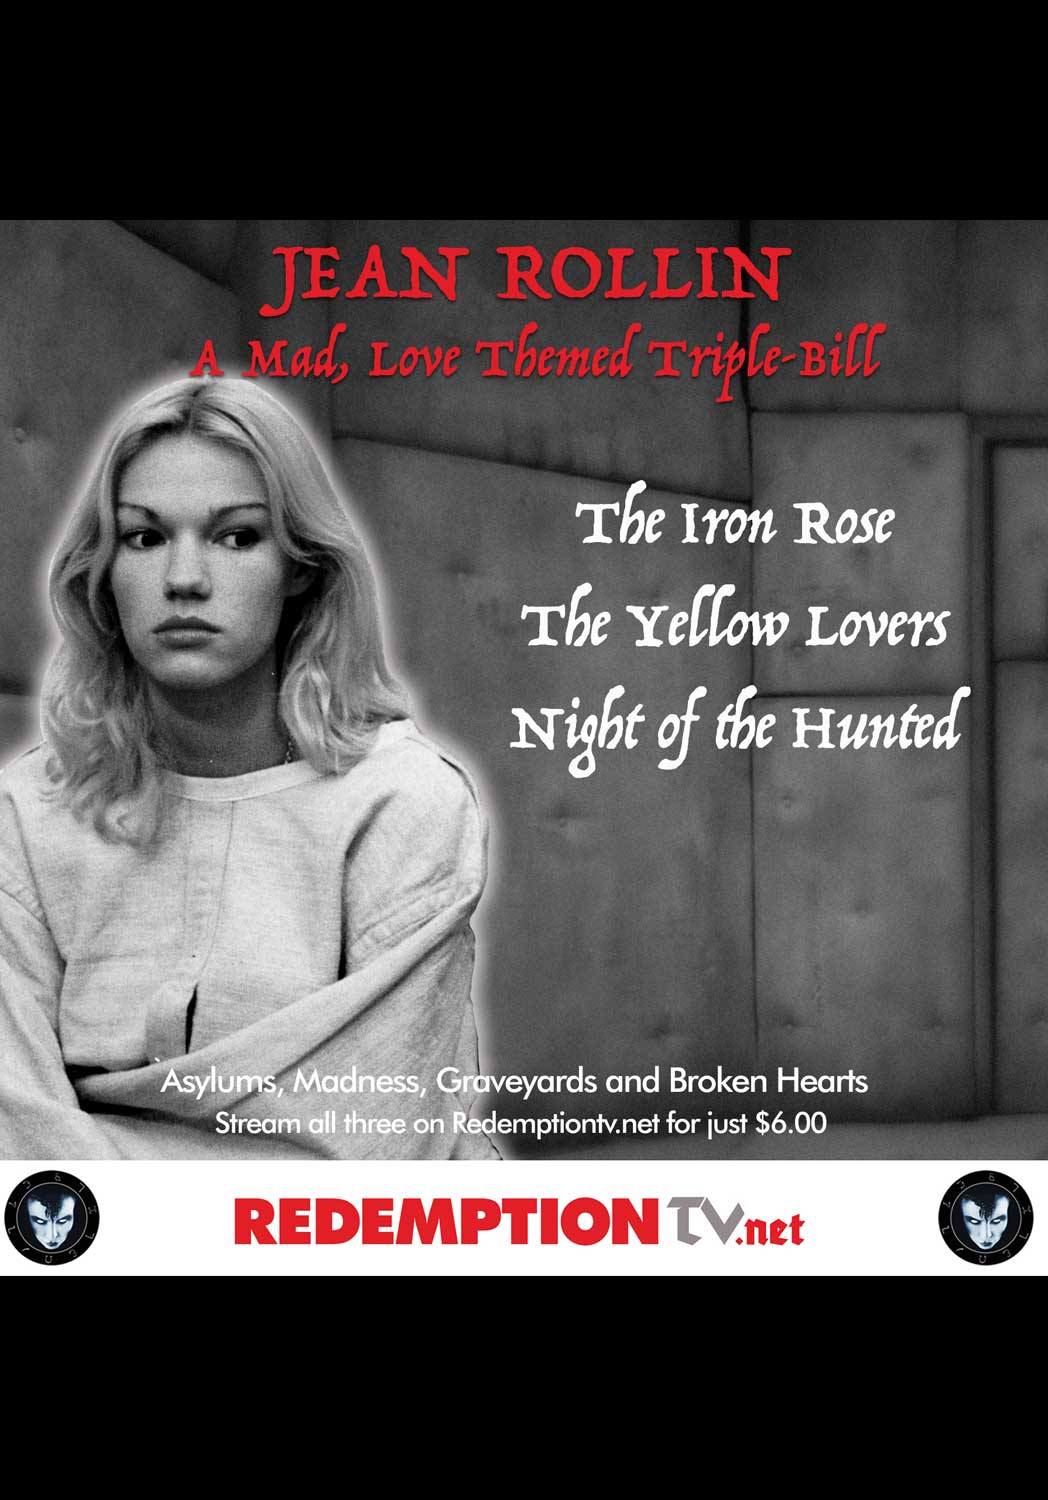 Stream Three fanastic Jean Rollin films for $6 - a man, love themed triple -bill!